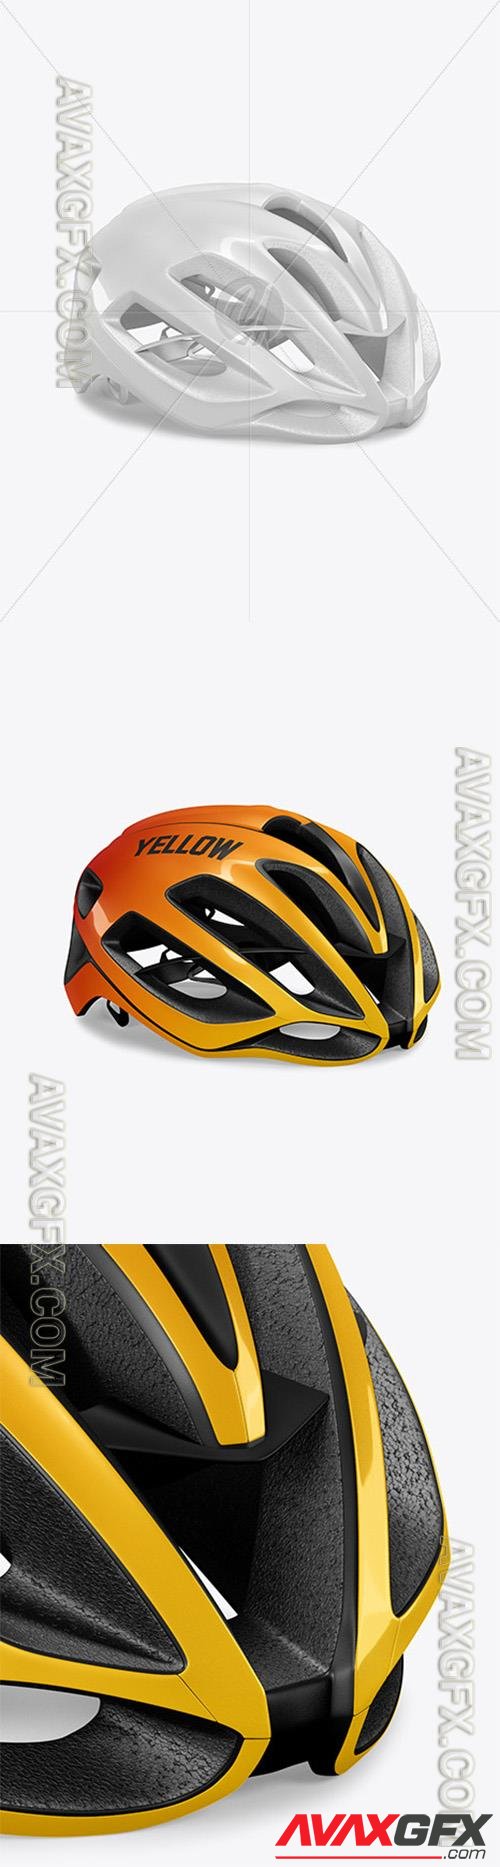 Cycling Helmet Mockup 75652